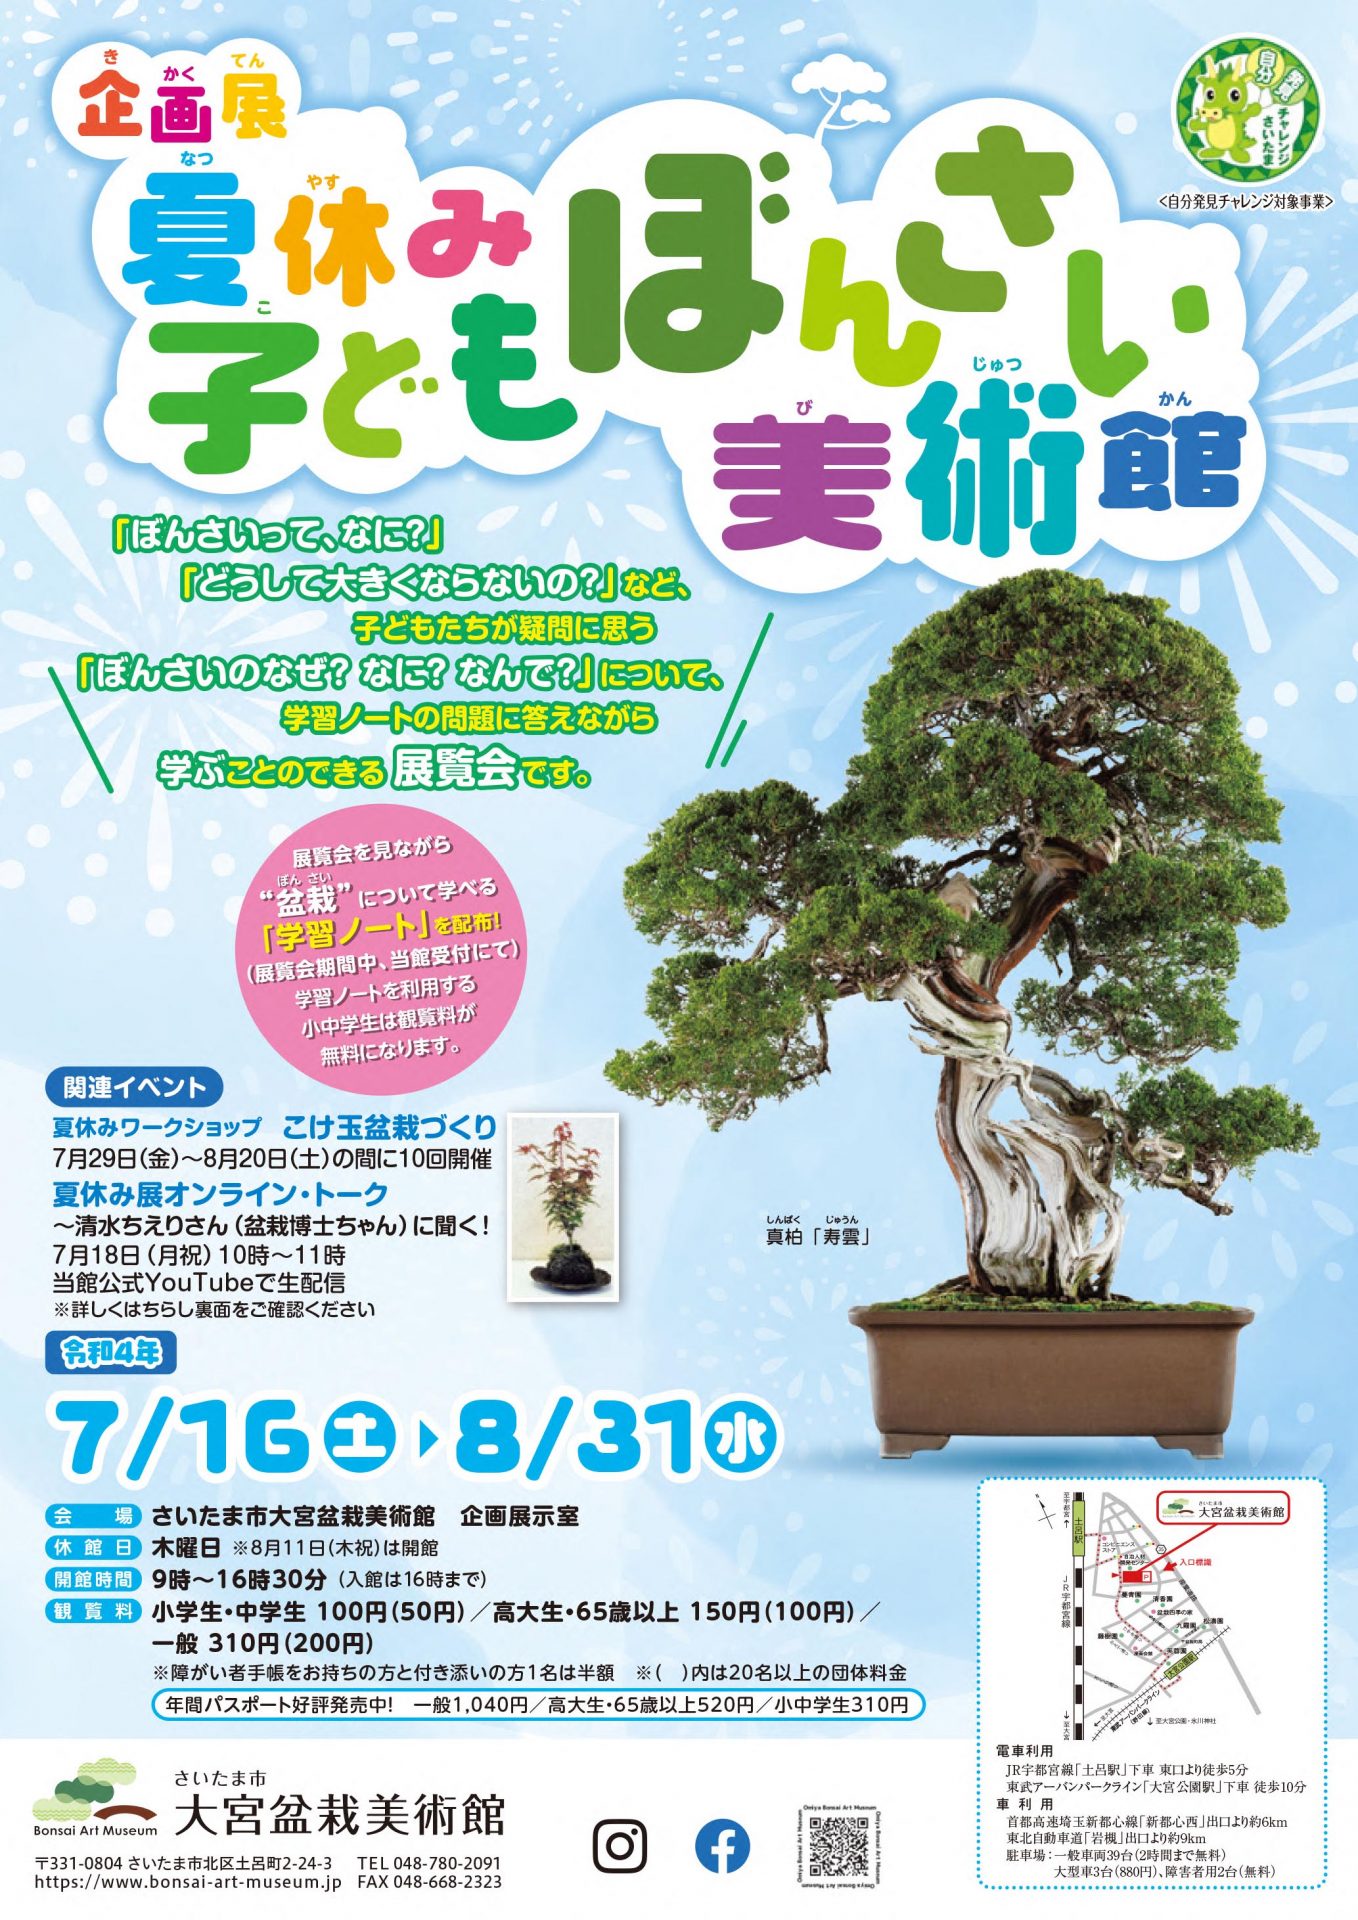 Bonsai Cultural Exhibition for Kids